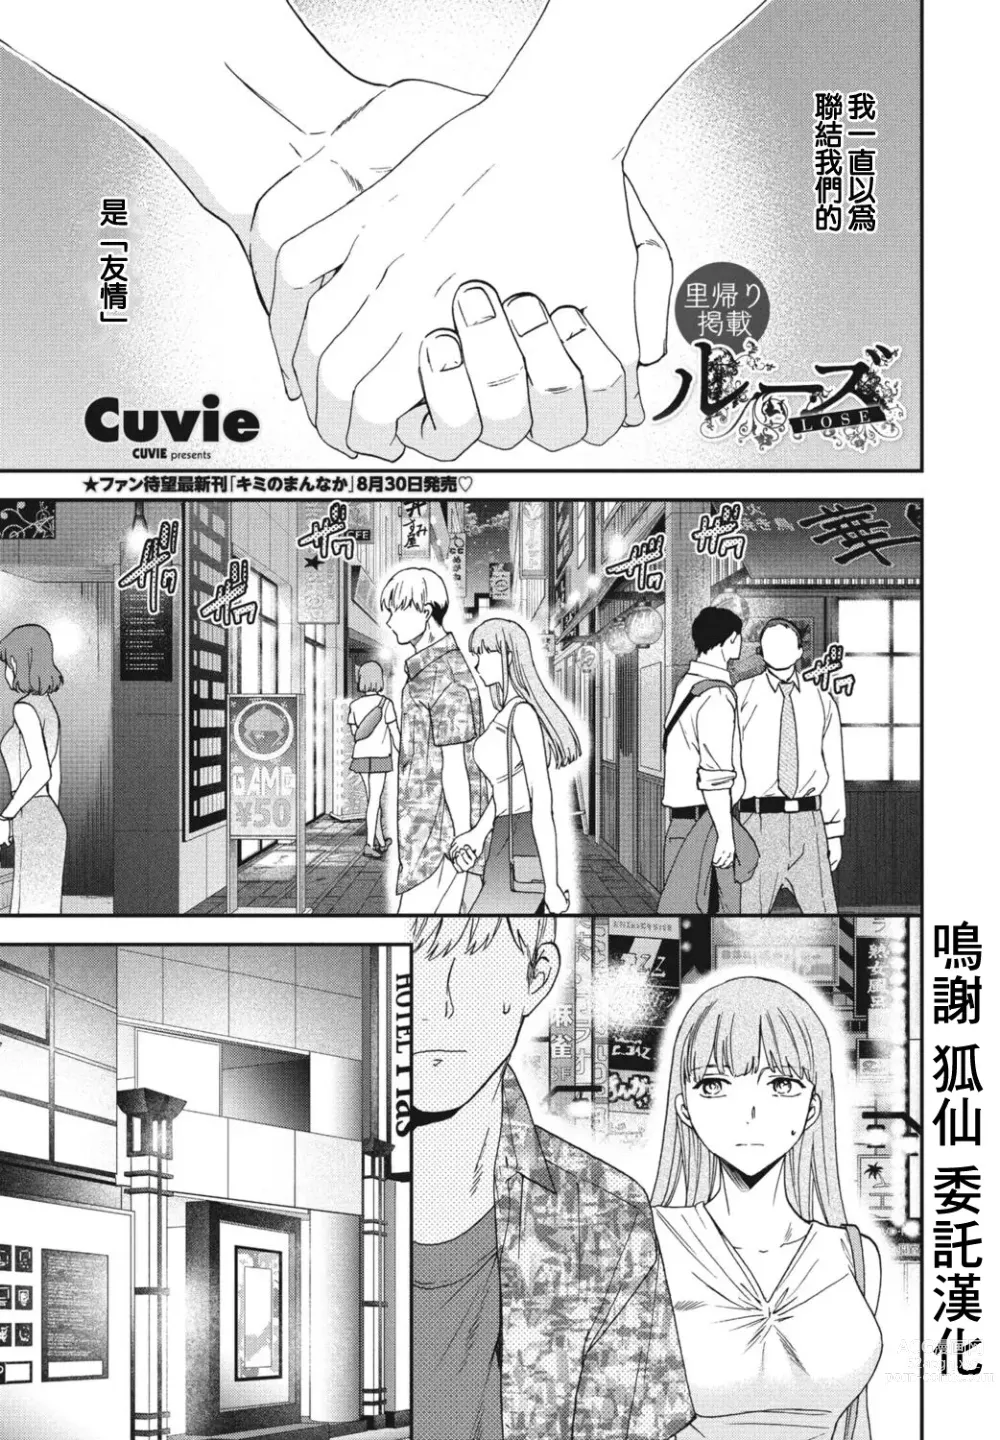 Page 1 of manga Lose